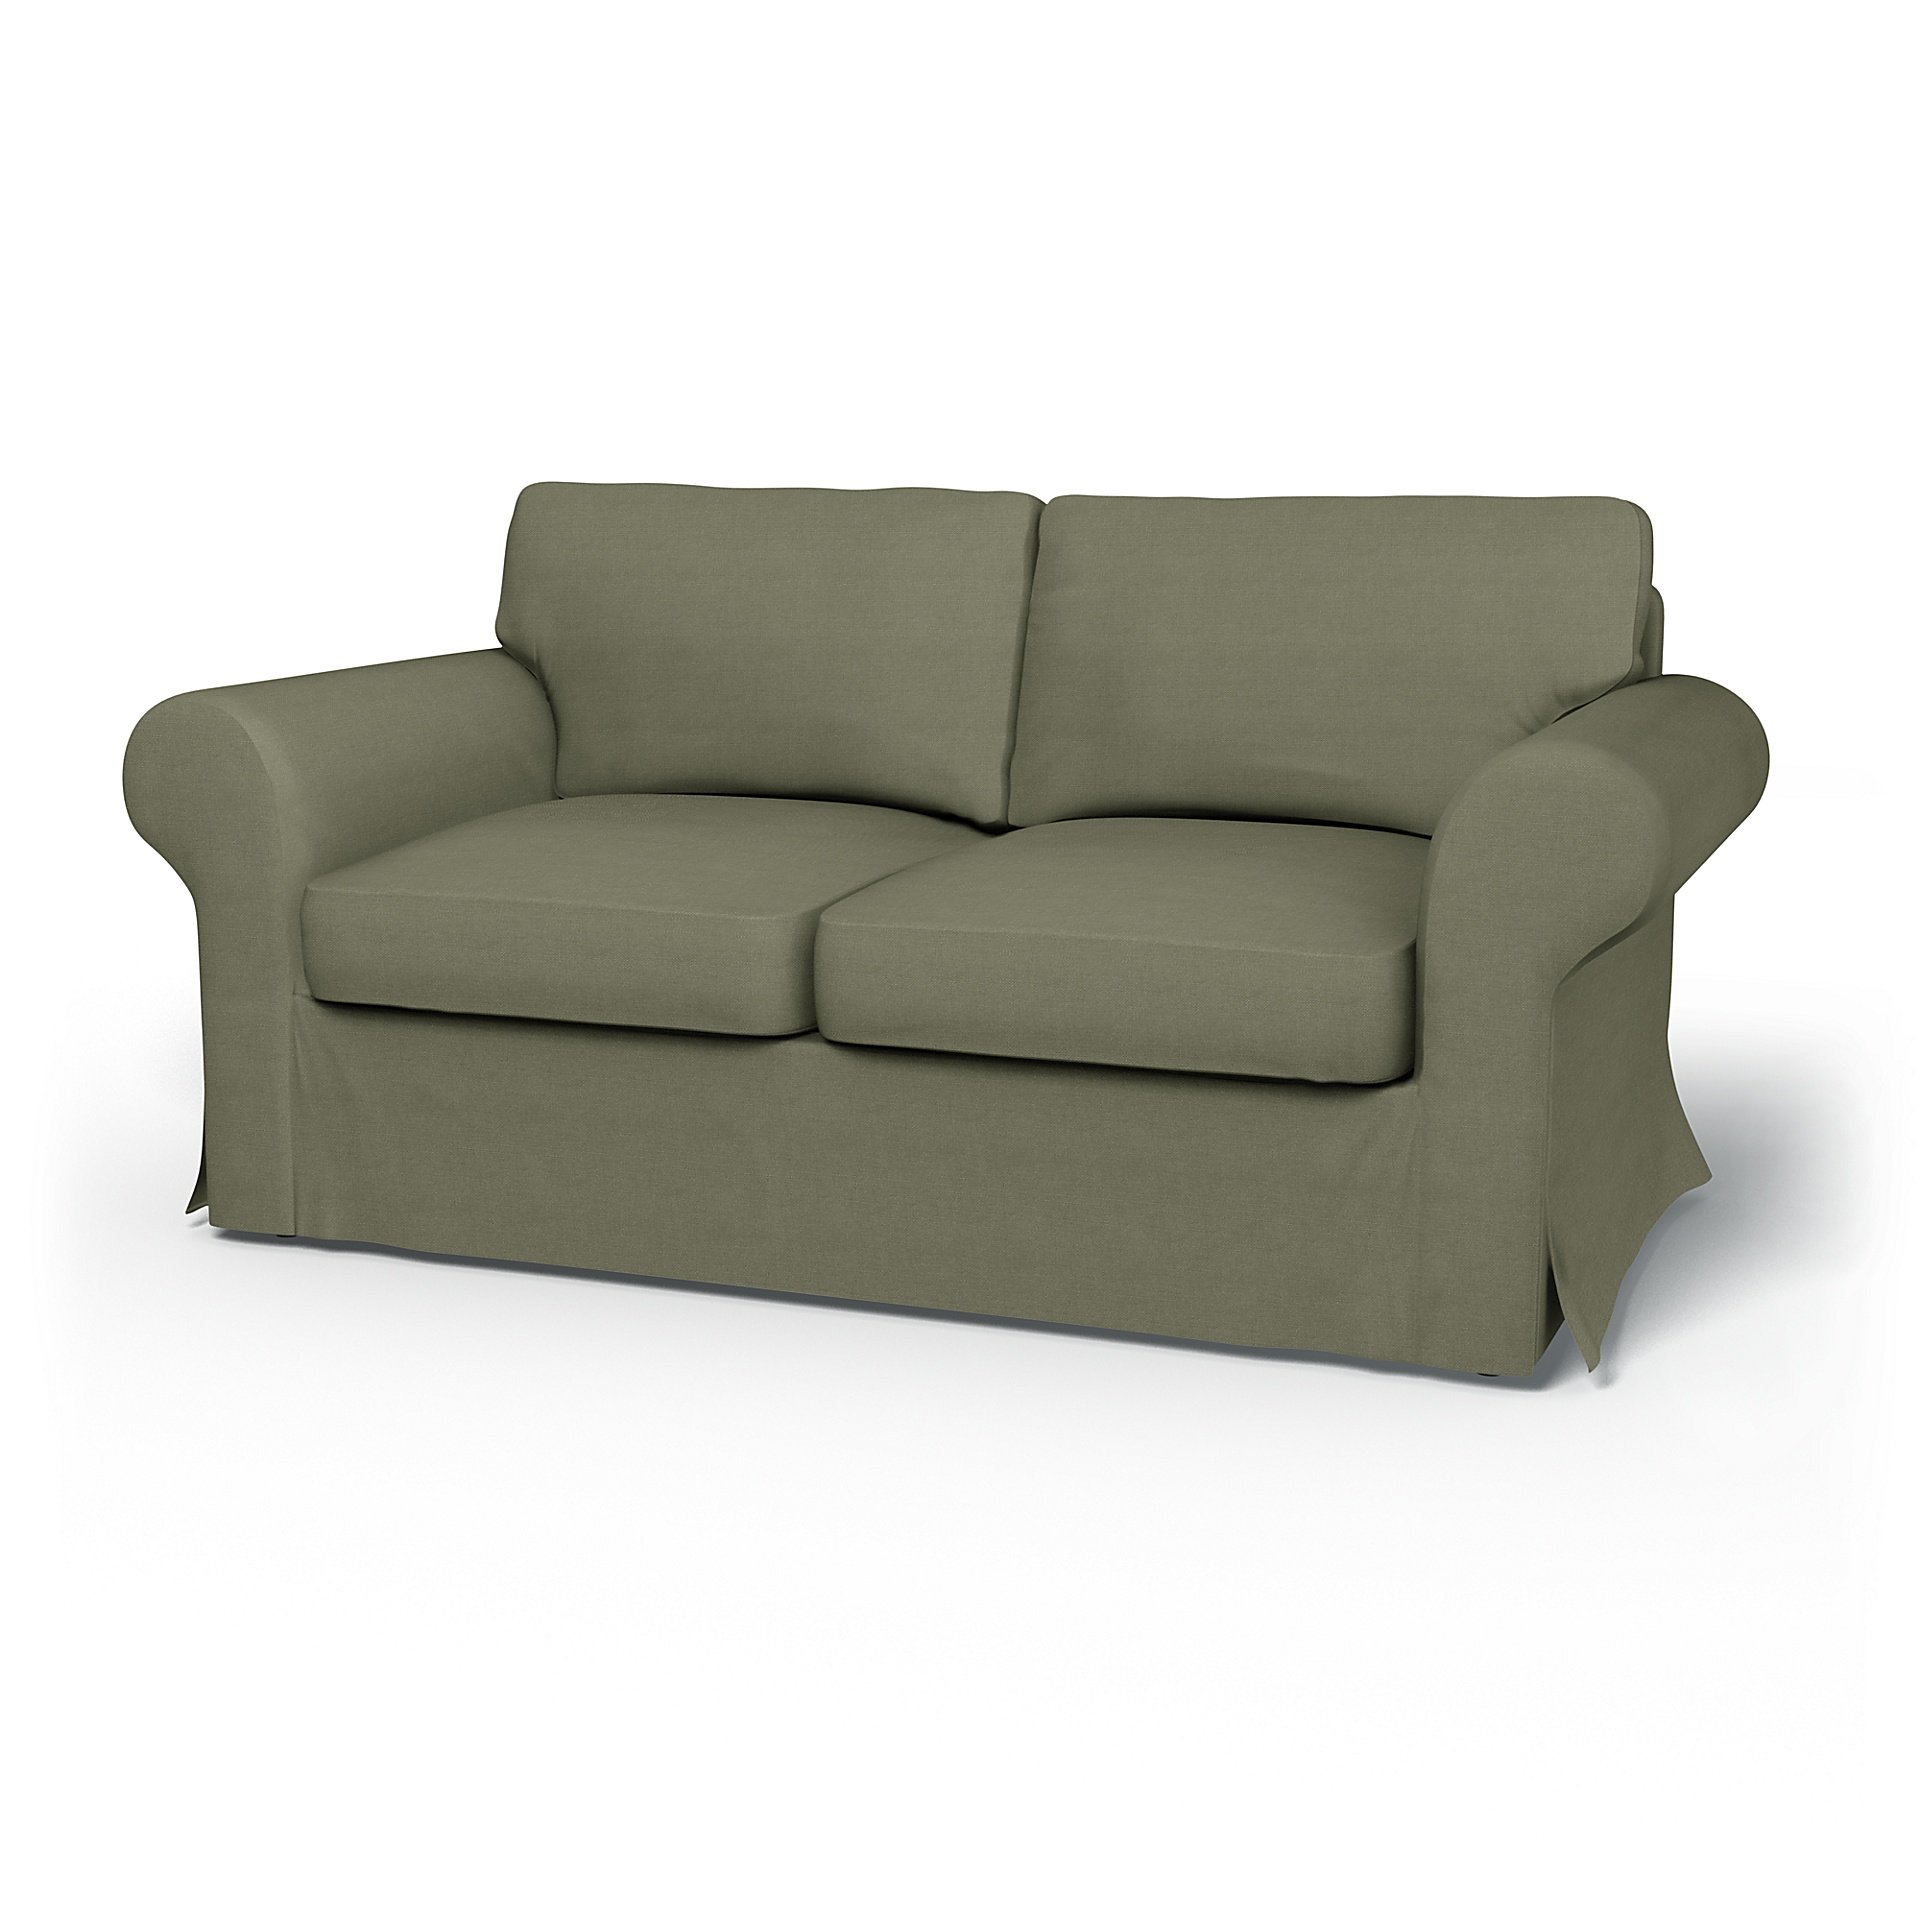 IKEA - Ektorp 2 Seater Sofa Bed Cover, Sage, Linen - Bemz